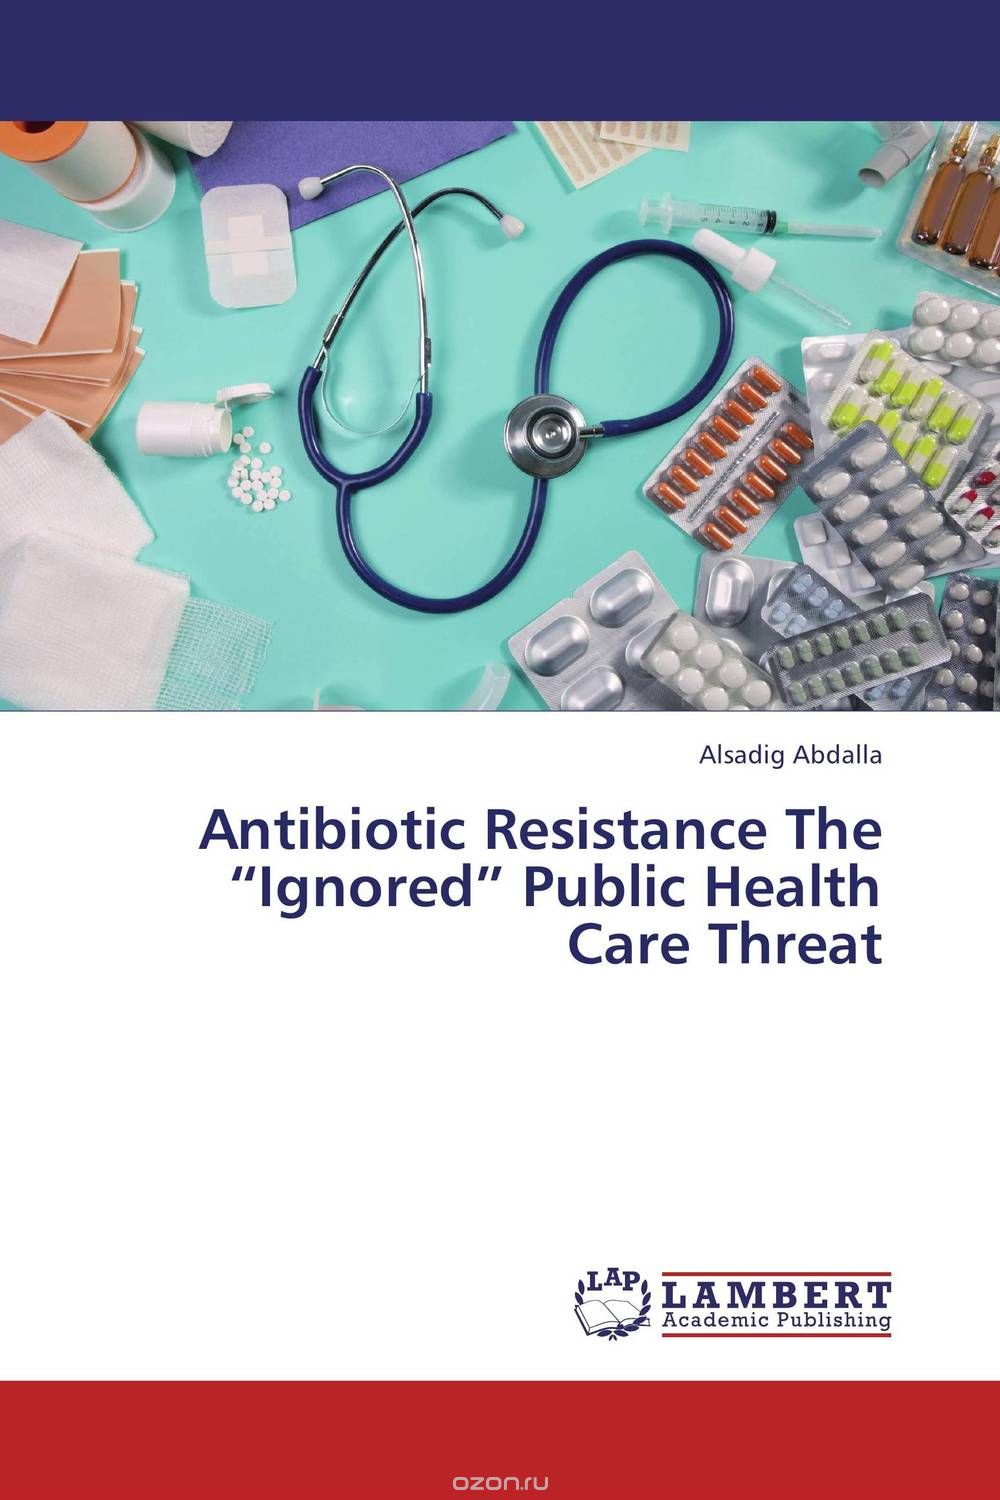 Antibiotic Resistance The “Ignored” Public Health Care Threat